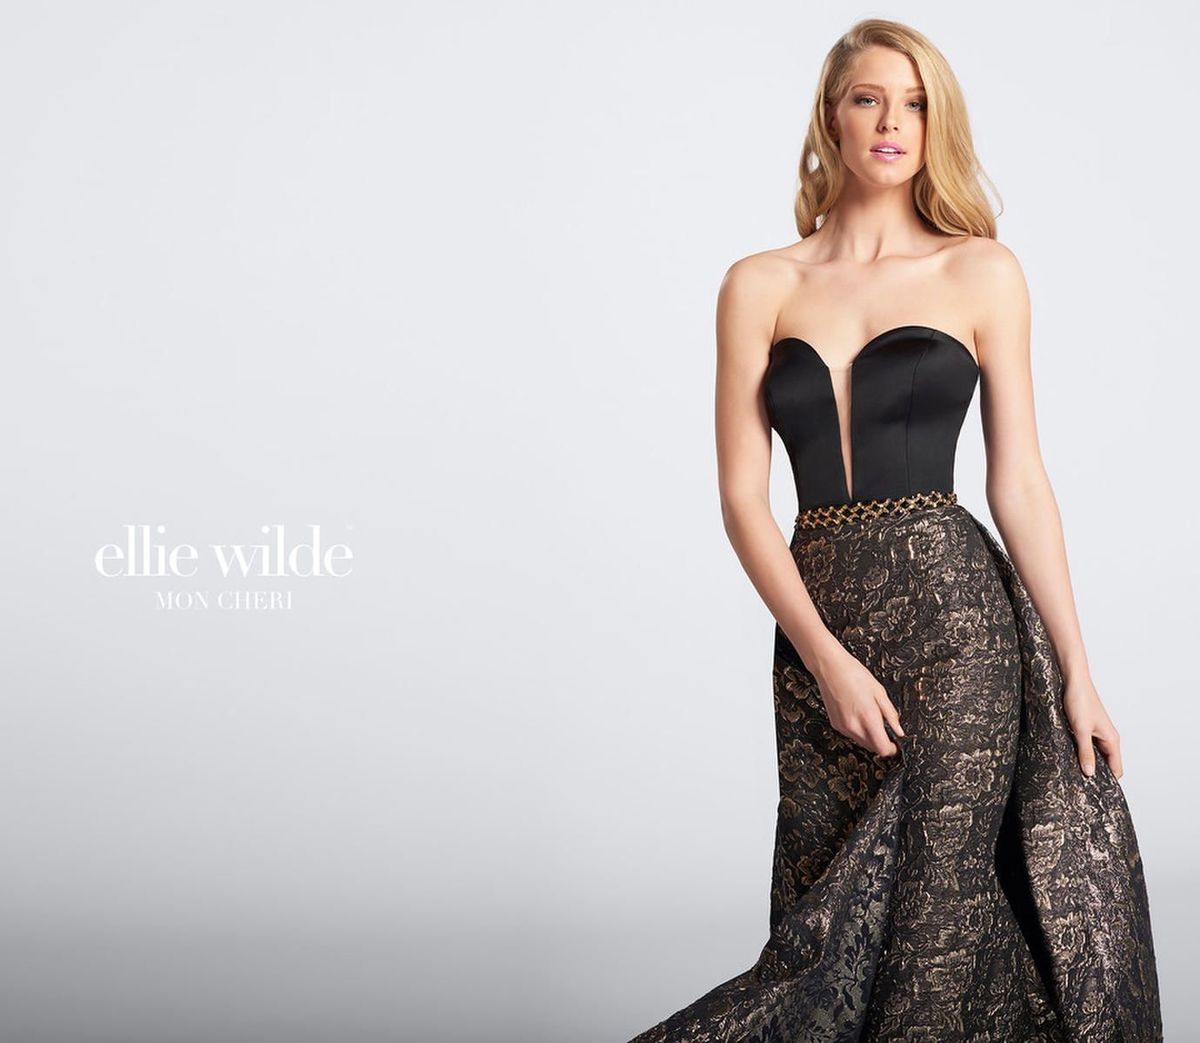 Style EW21768 Ellie Wilde Size 4 Prom Black Mermaid Dress on Queenly